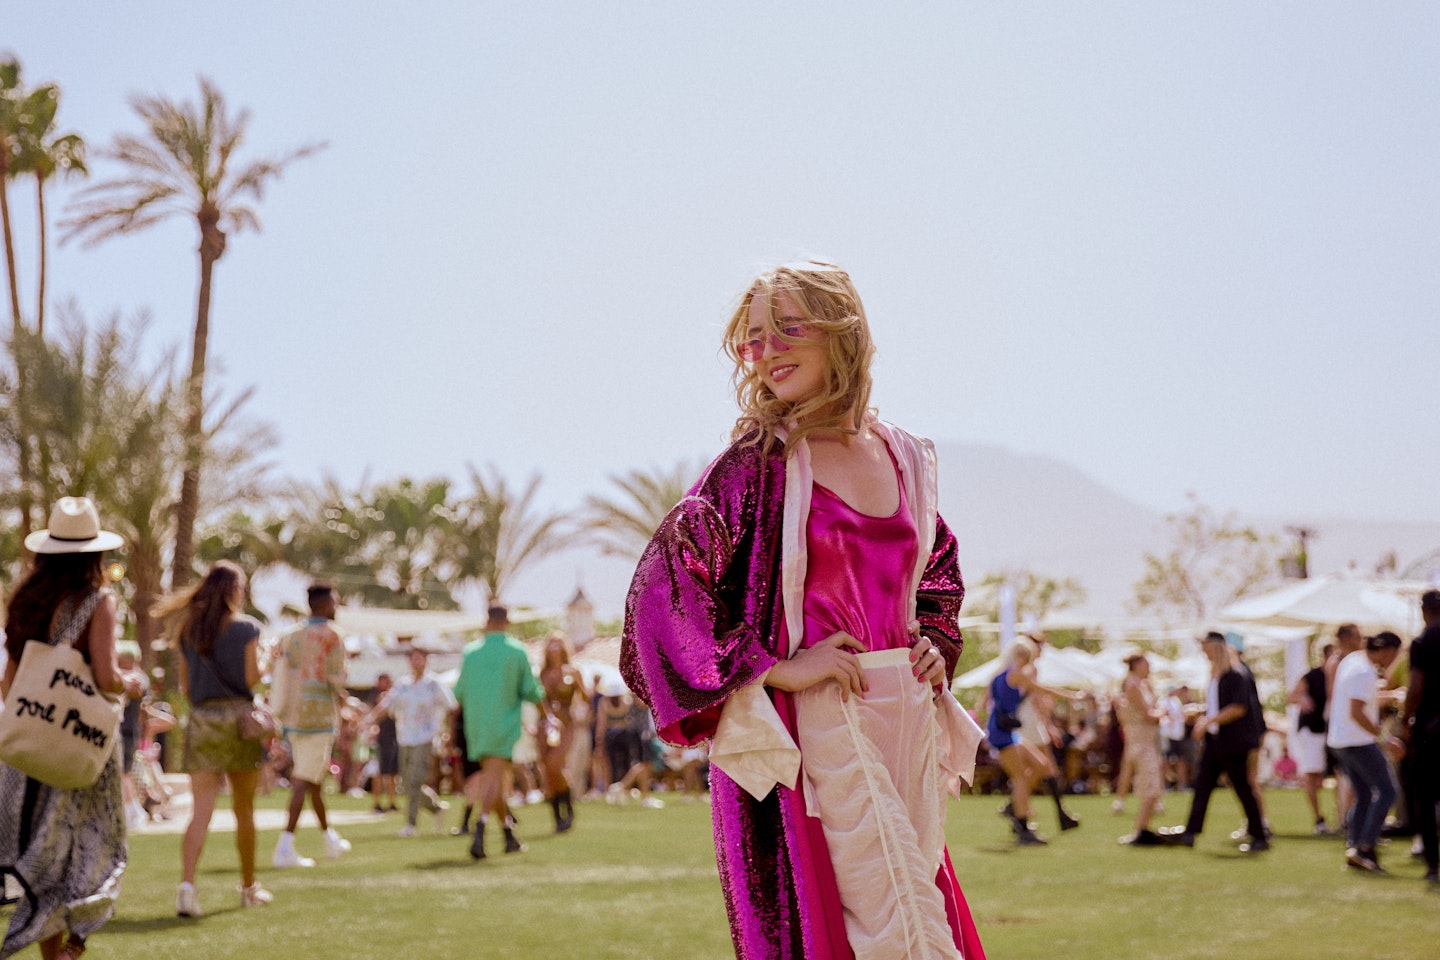 From Coachella: Daniel Caesar Provides a Silhouette of Beauty, Arts